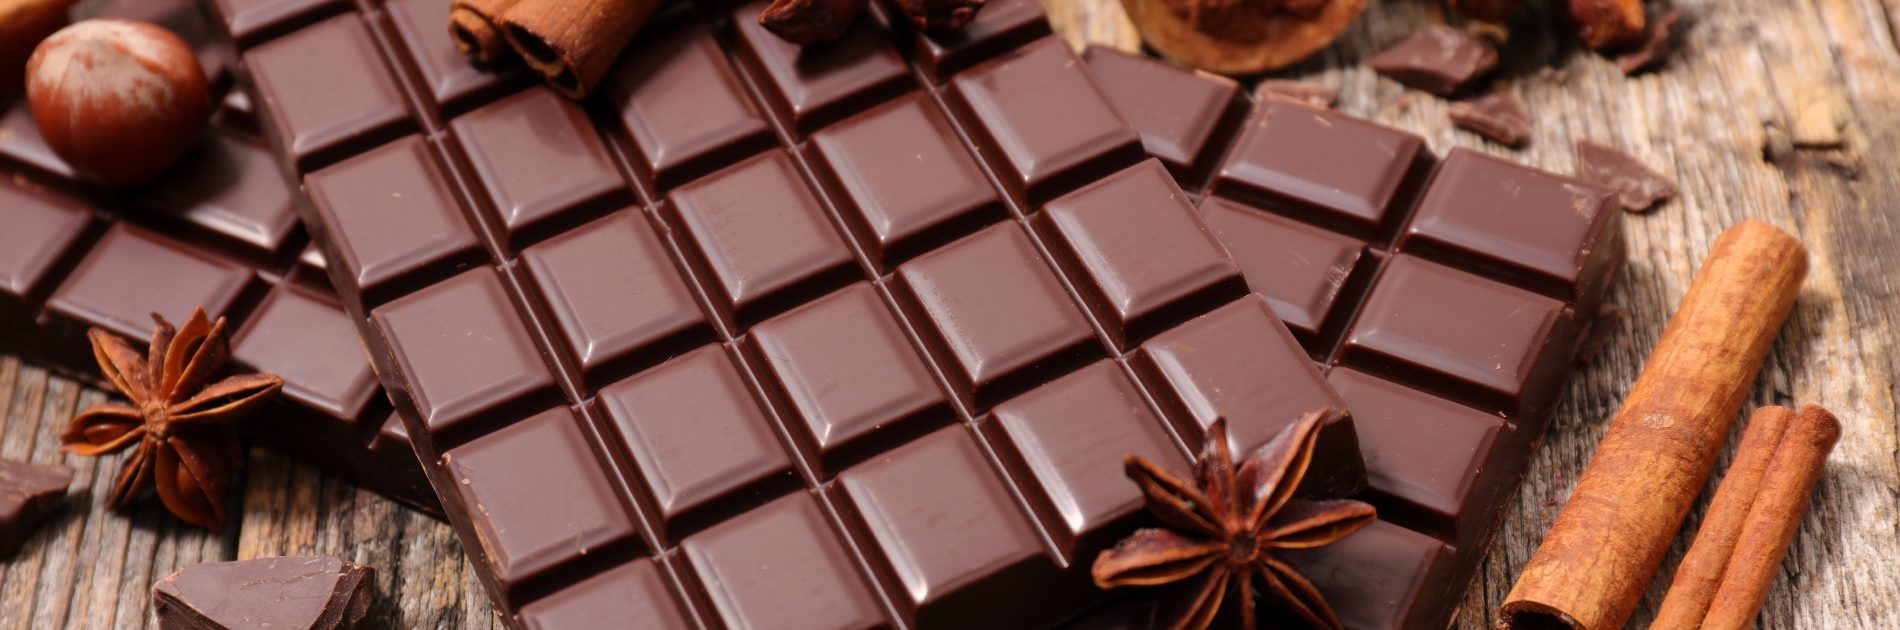 A image of a broken bar of chocolate.